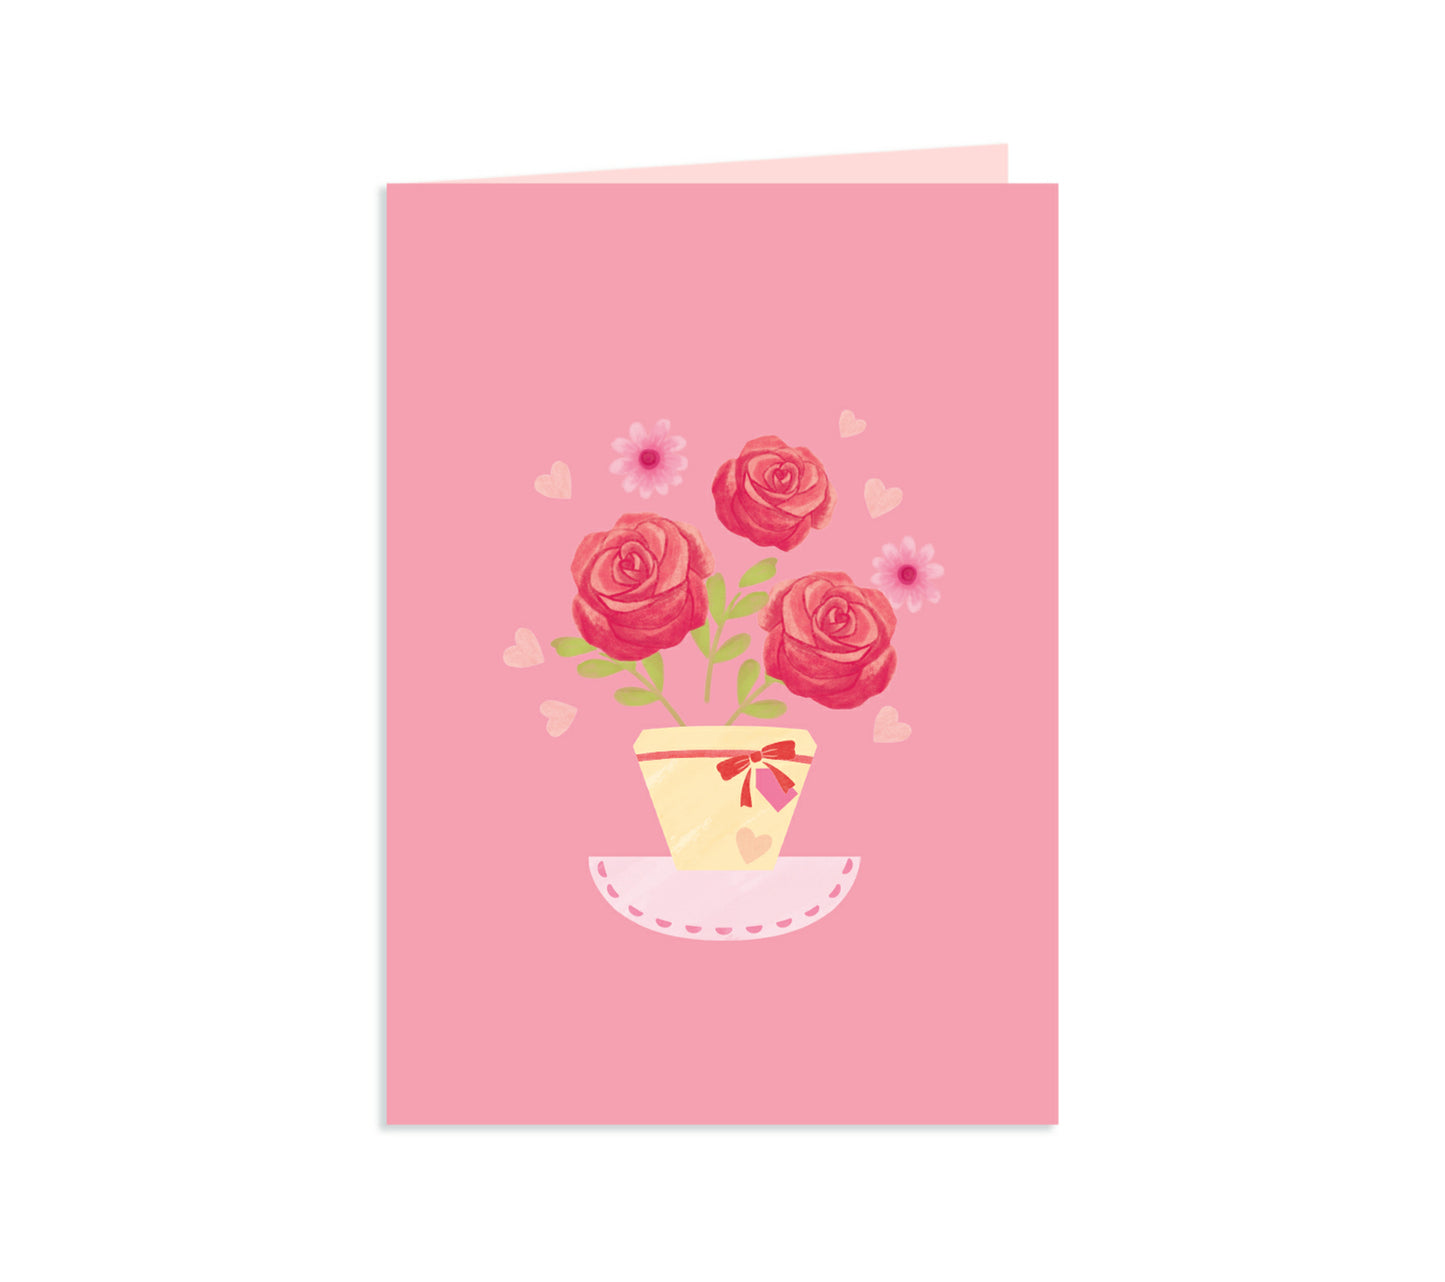 Roses Floral Bouquet Pop-Up Card